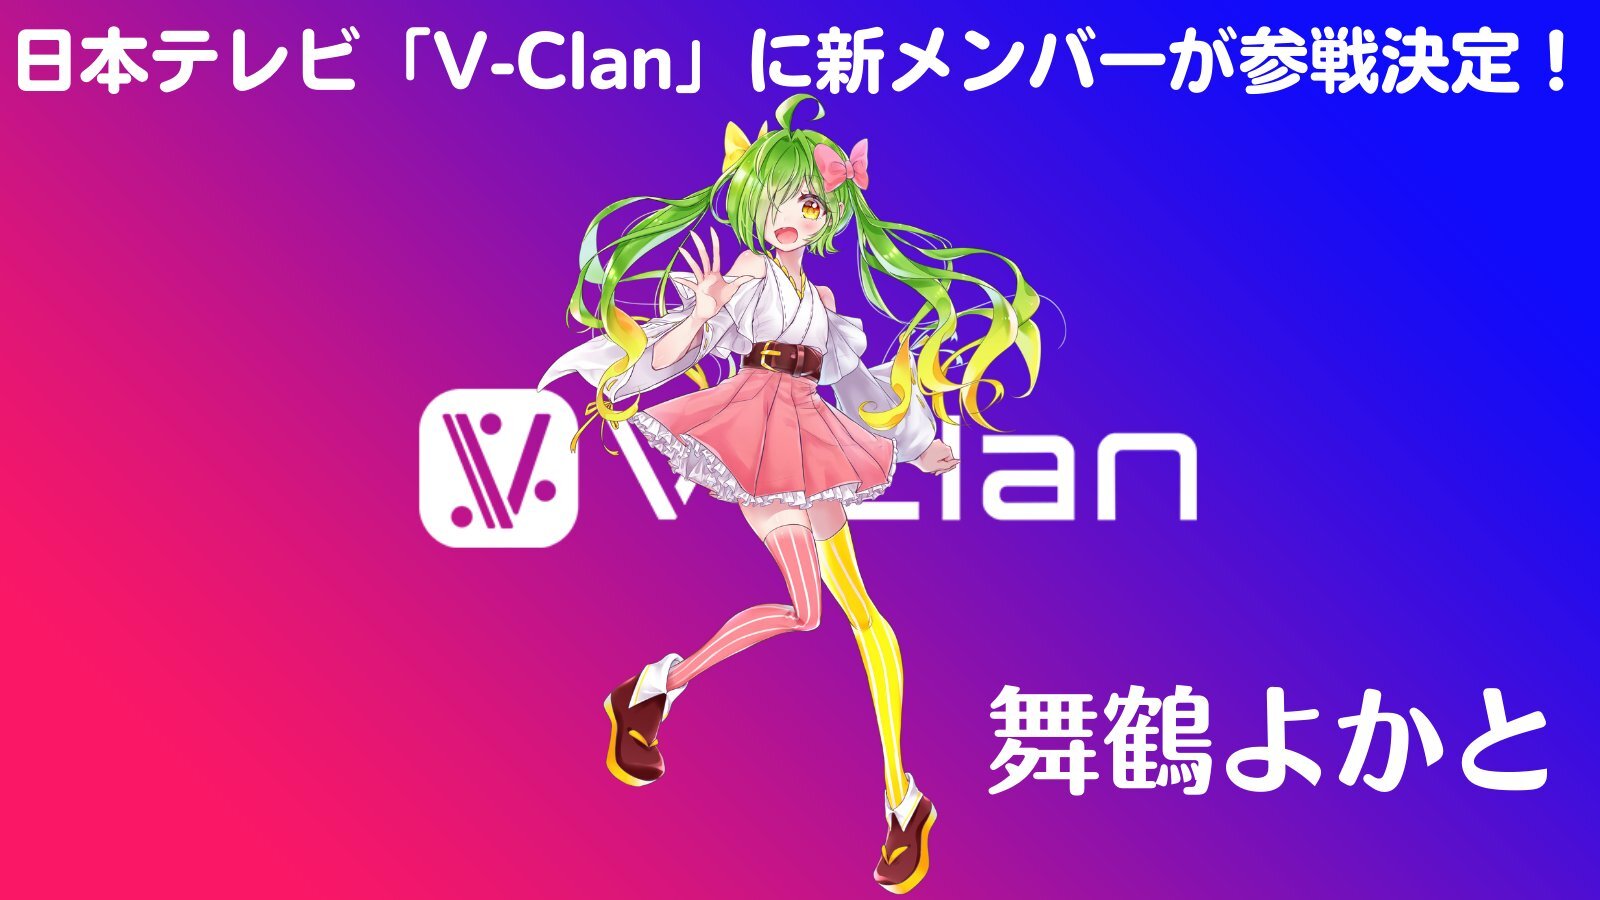 V-Clanに参加します！